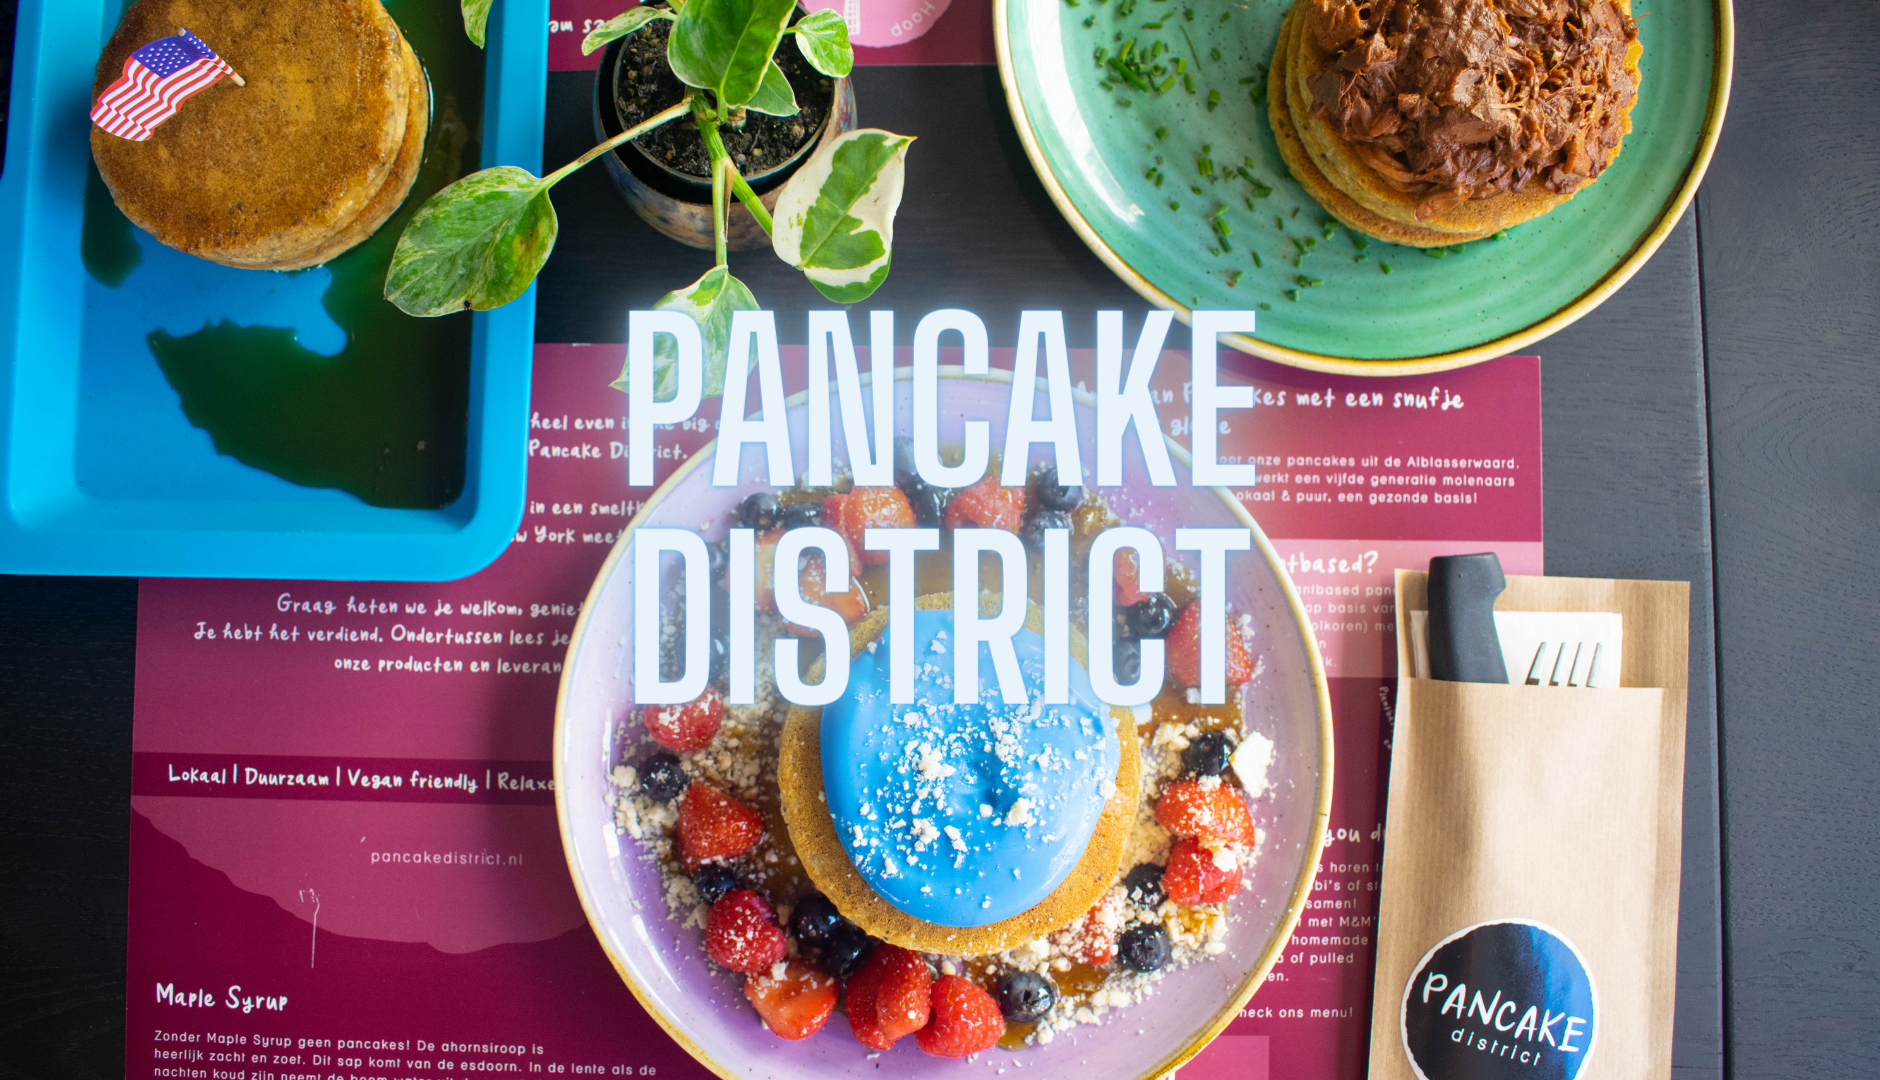 Pancake District Dordrecht